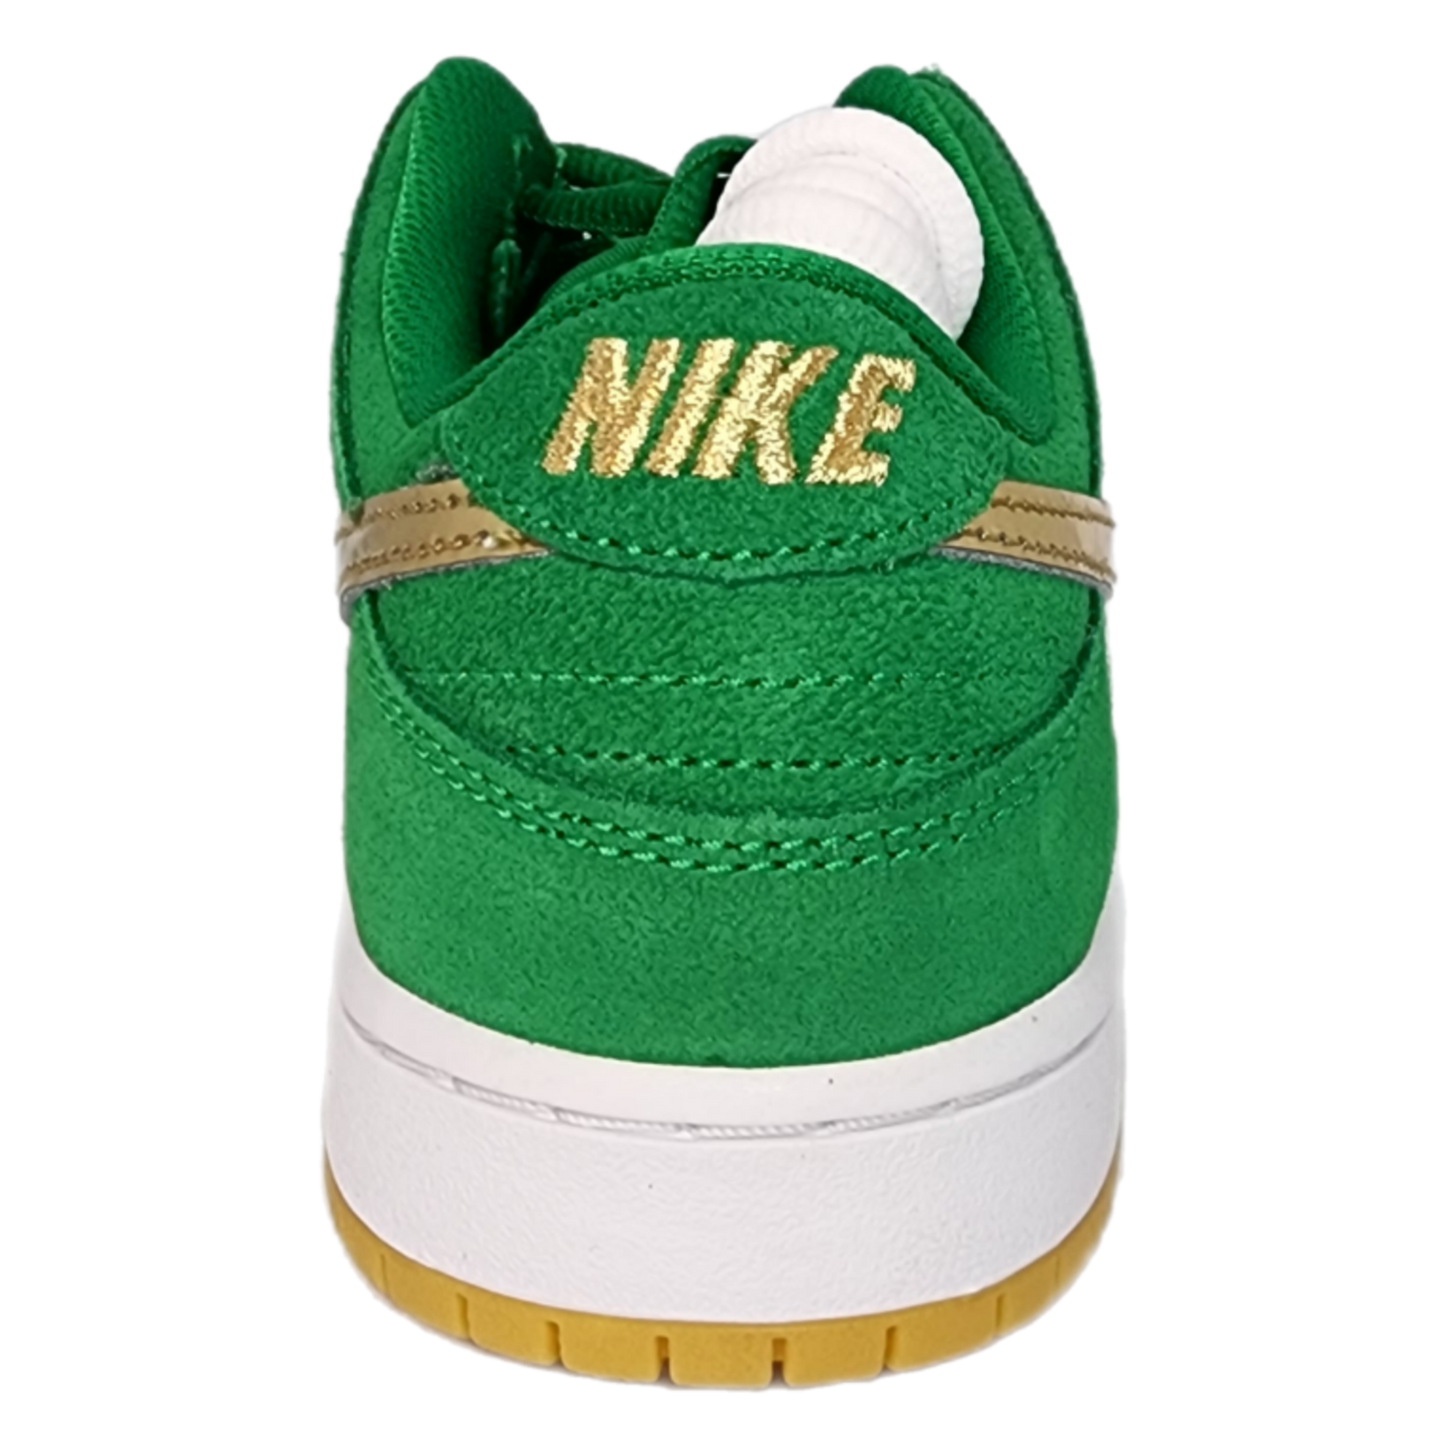 Nike SB - "Dunk Low" - St. Patrick